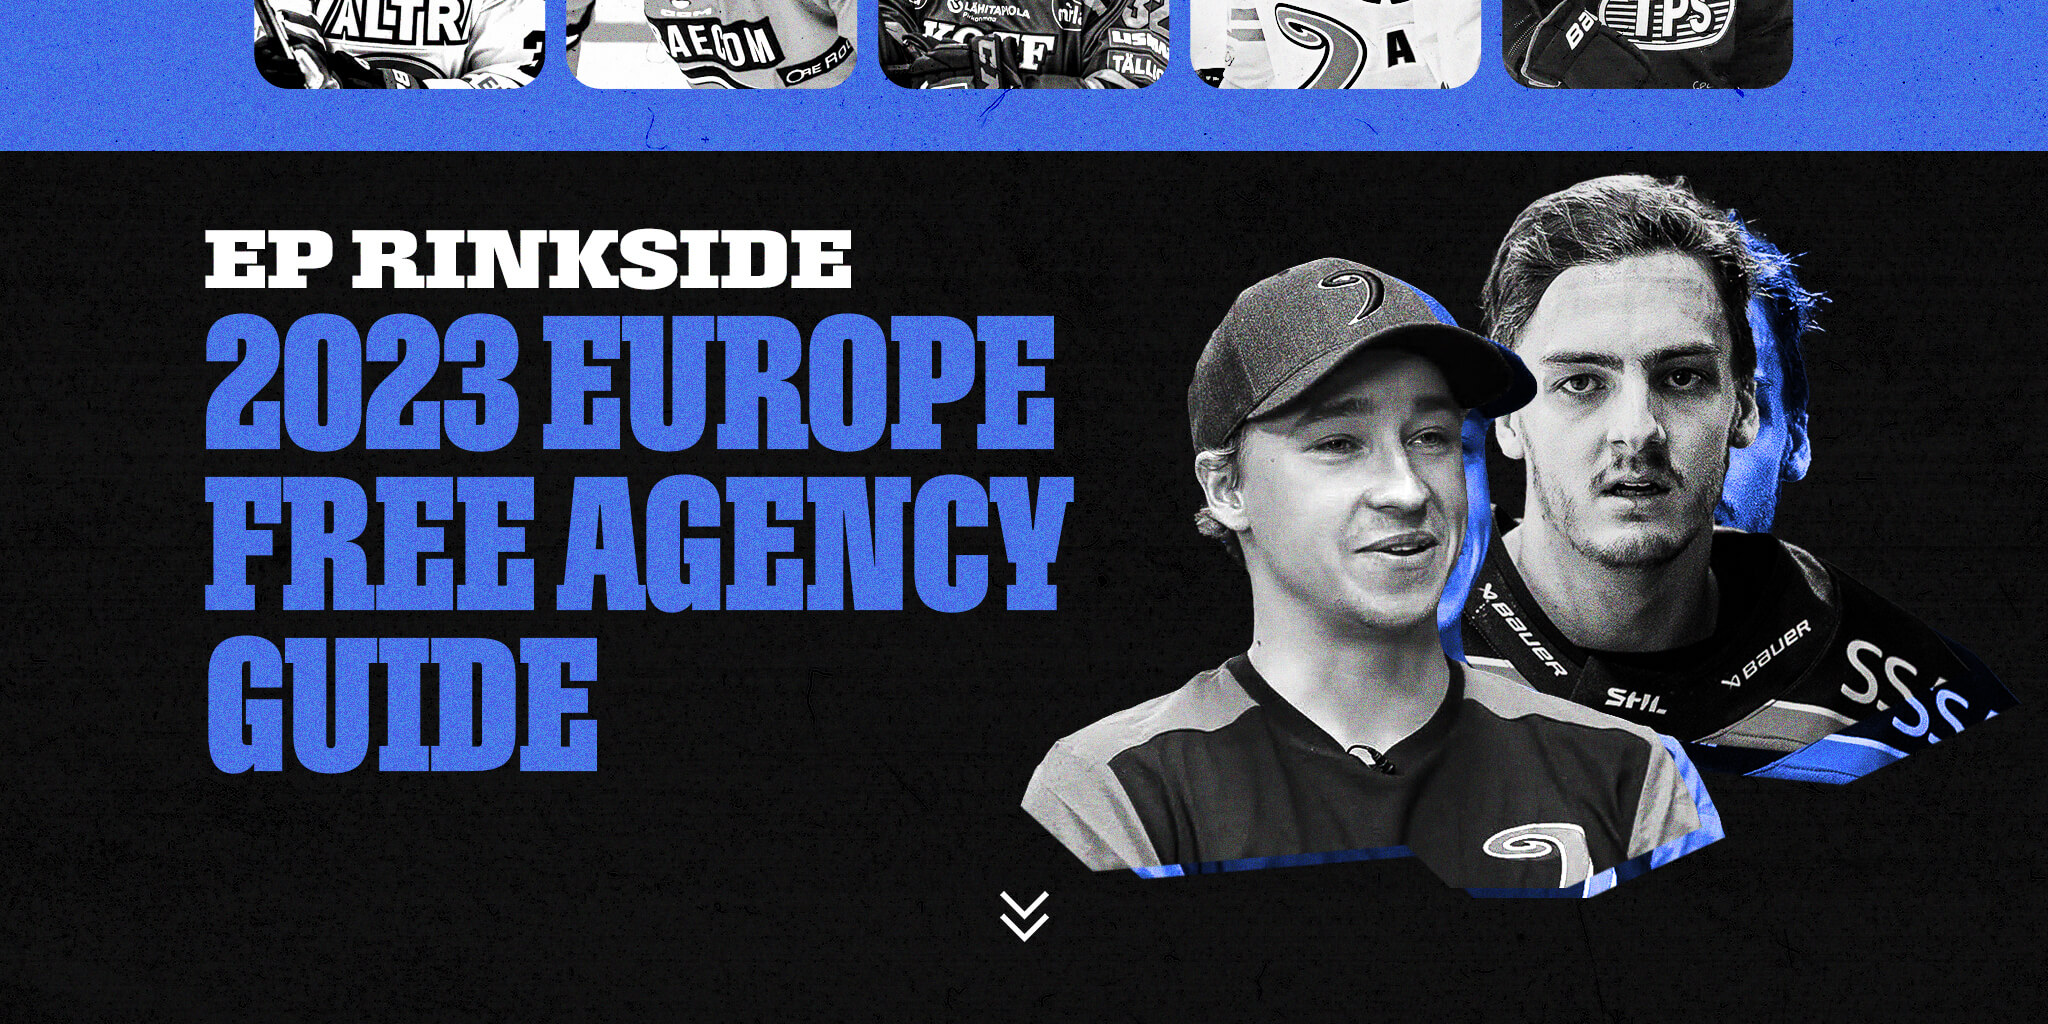 The EP Rinkside 2023 European Free Agency Guide